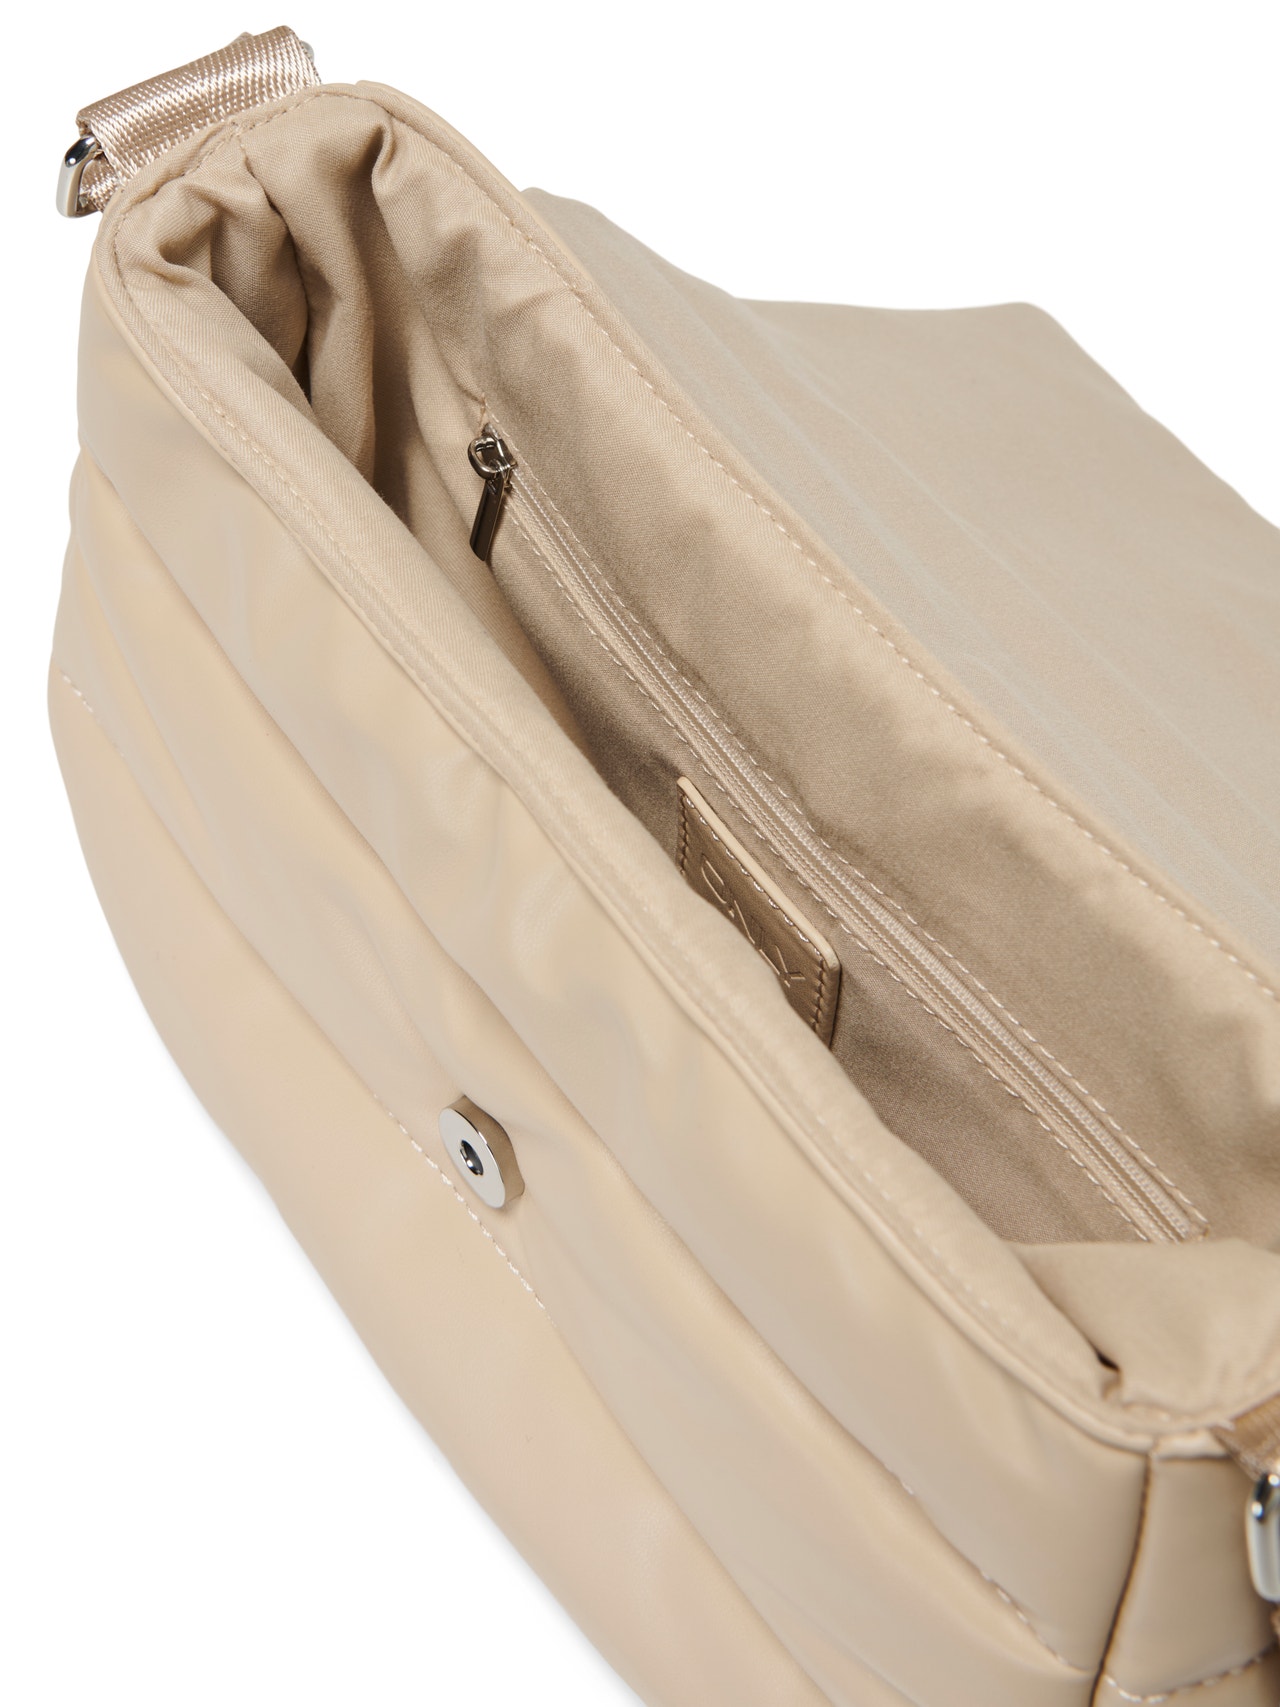 ONLY Adjustable strap Bag -Irish Cream - 15300818